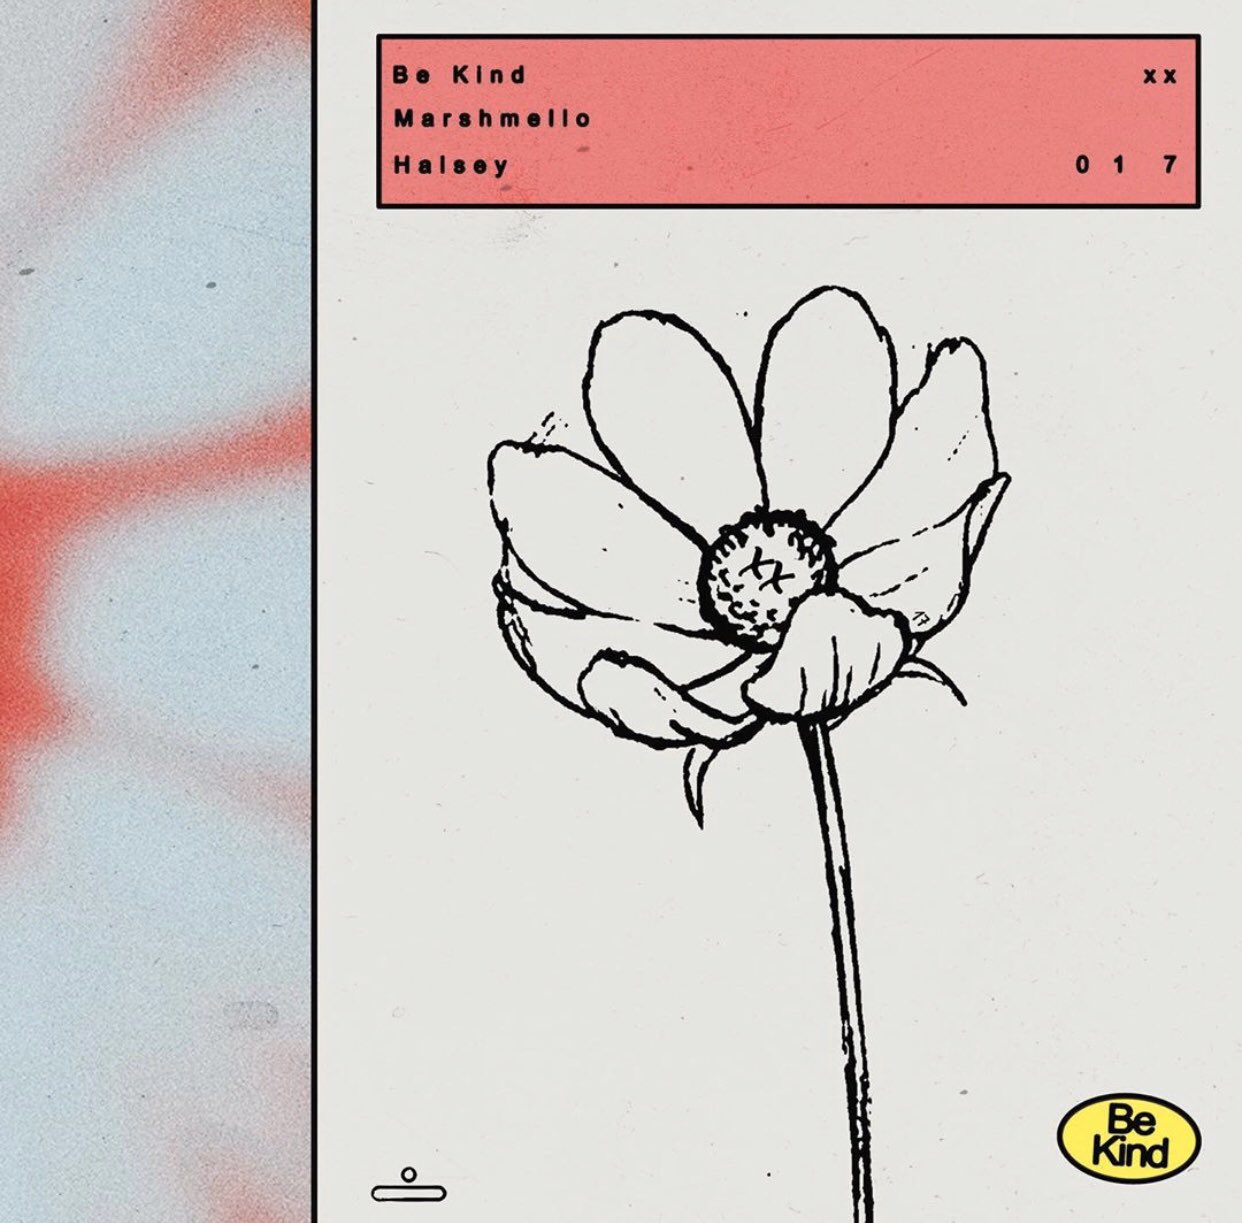 New Music: Halsey and Marshmello’s heartfelt new single ‘Be Kind’. Listen Here: - 78 MUGIBSON